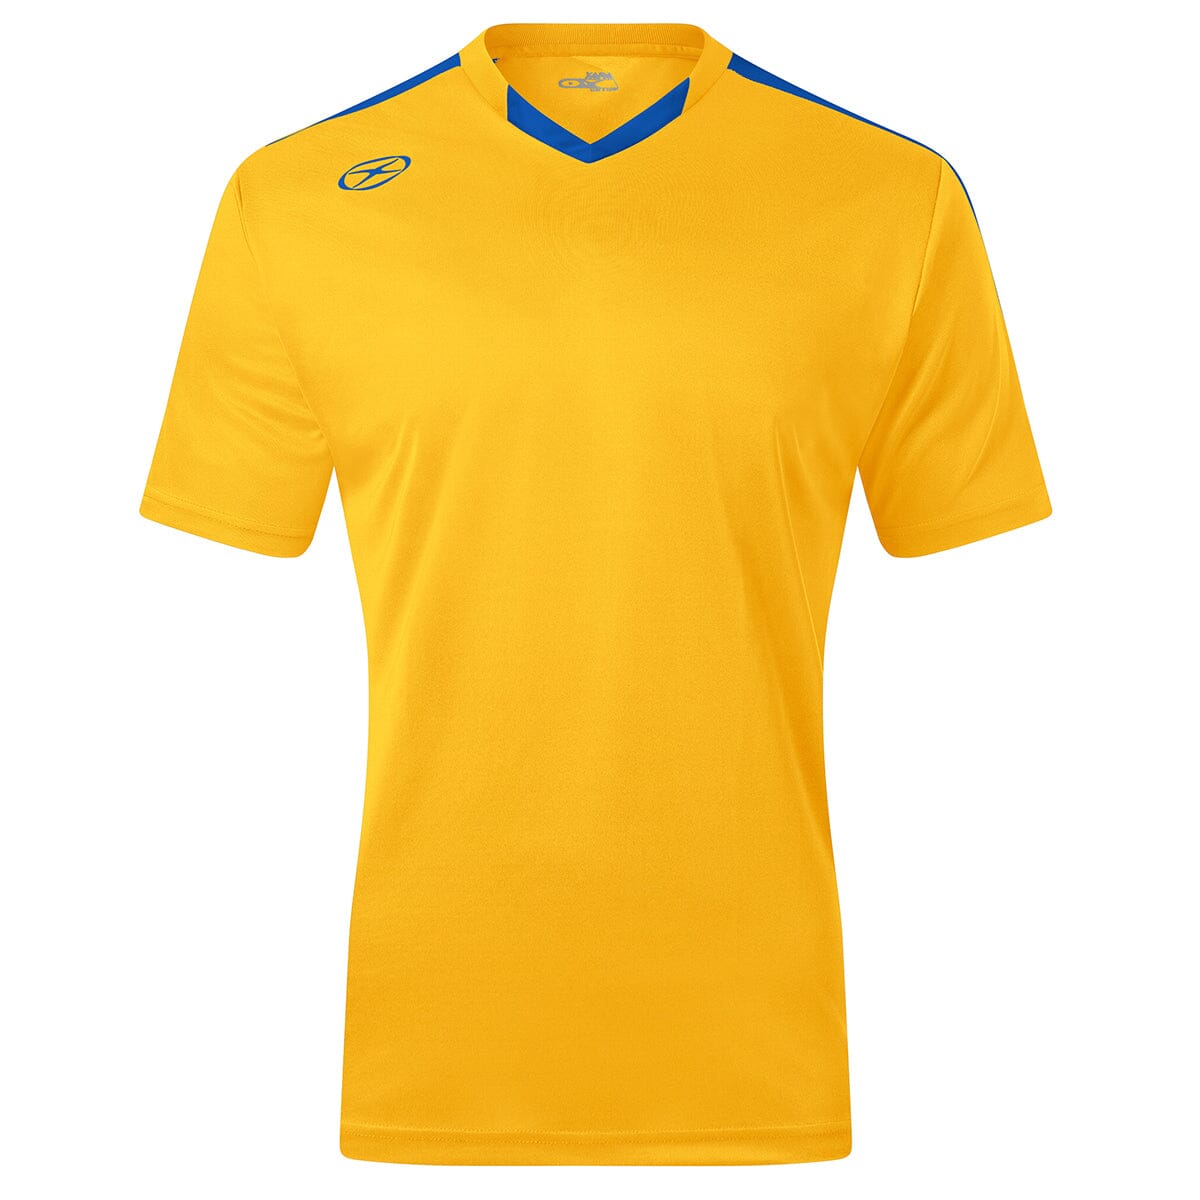 Britannia Jersey - Home Colors - Male Shirt Xara Soccer Gold/Royal Small 